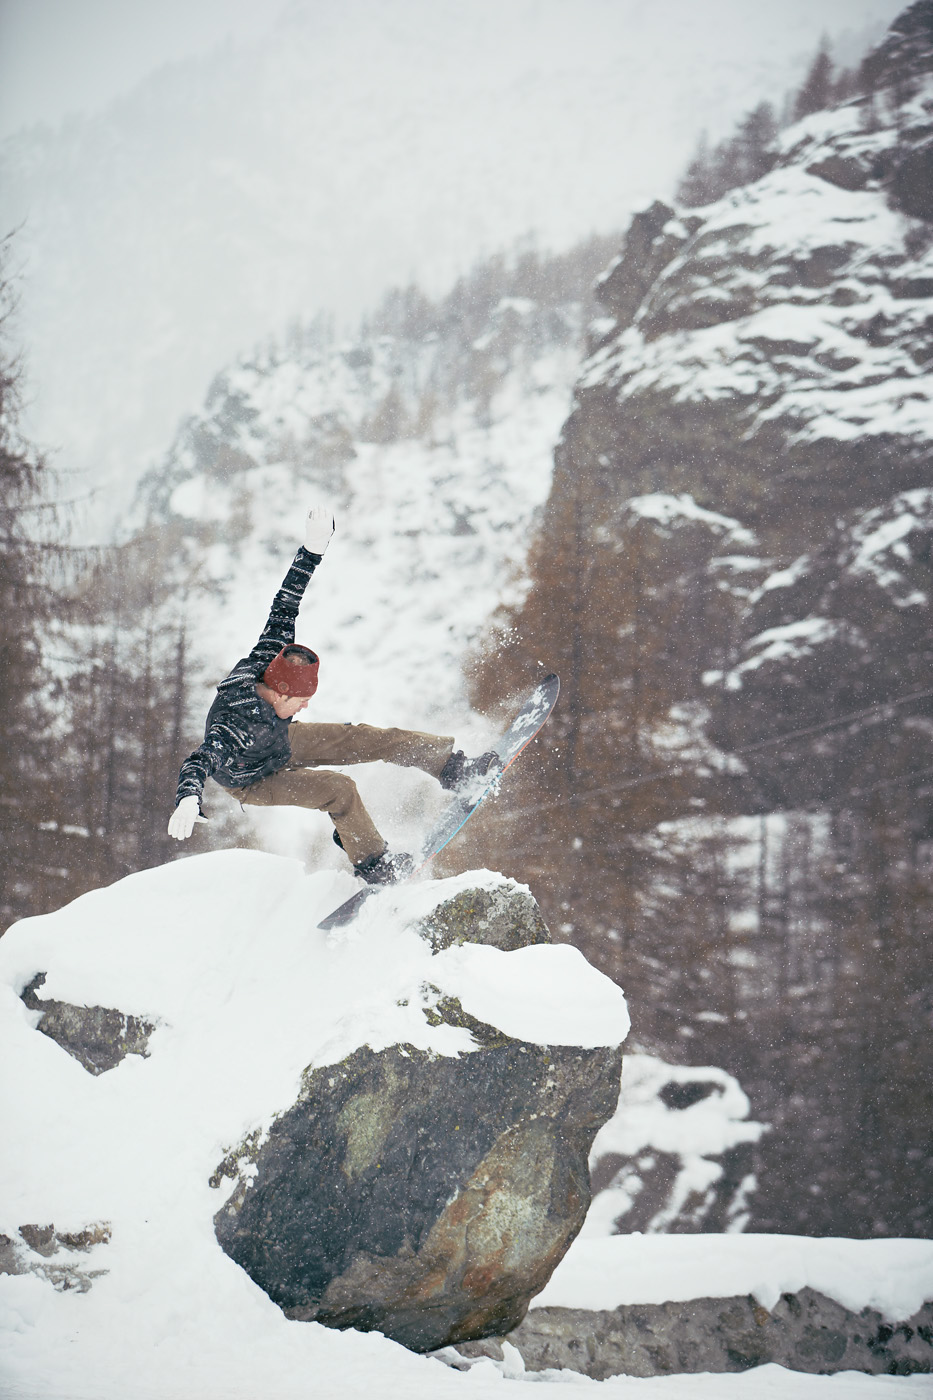 maloja Snowboarding cerviñio Italy winter snow powder free ride Free style action marioentero